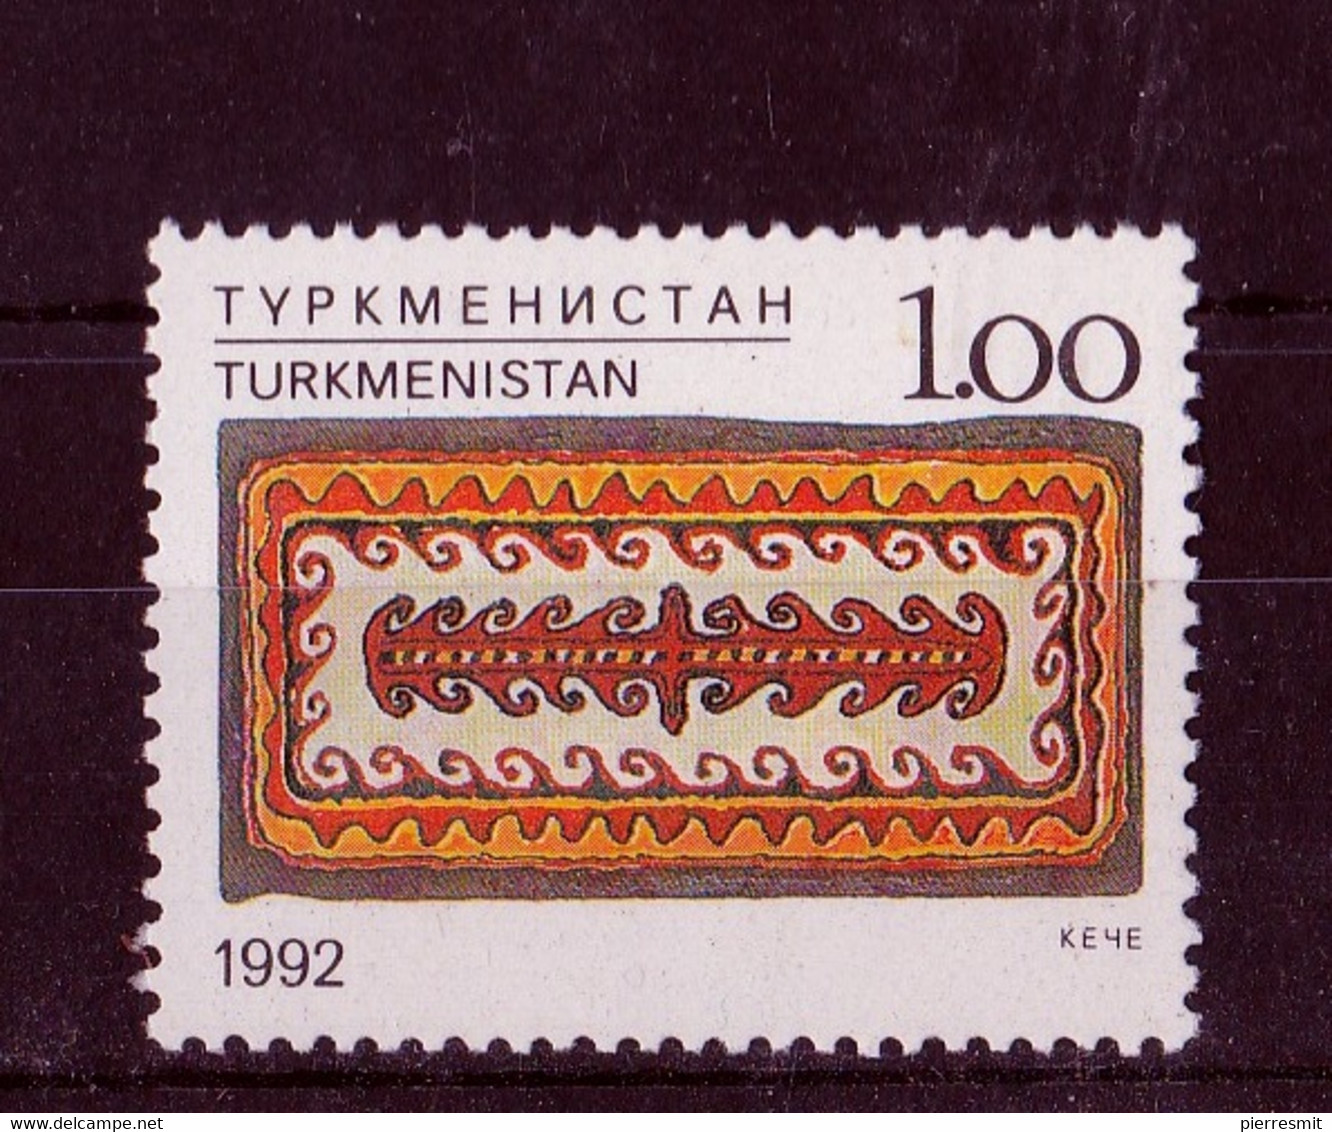 UMM - 1992 Handicrafts - Turkmenistan